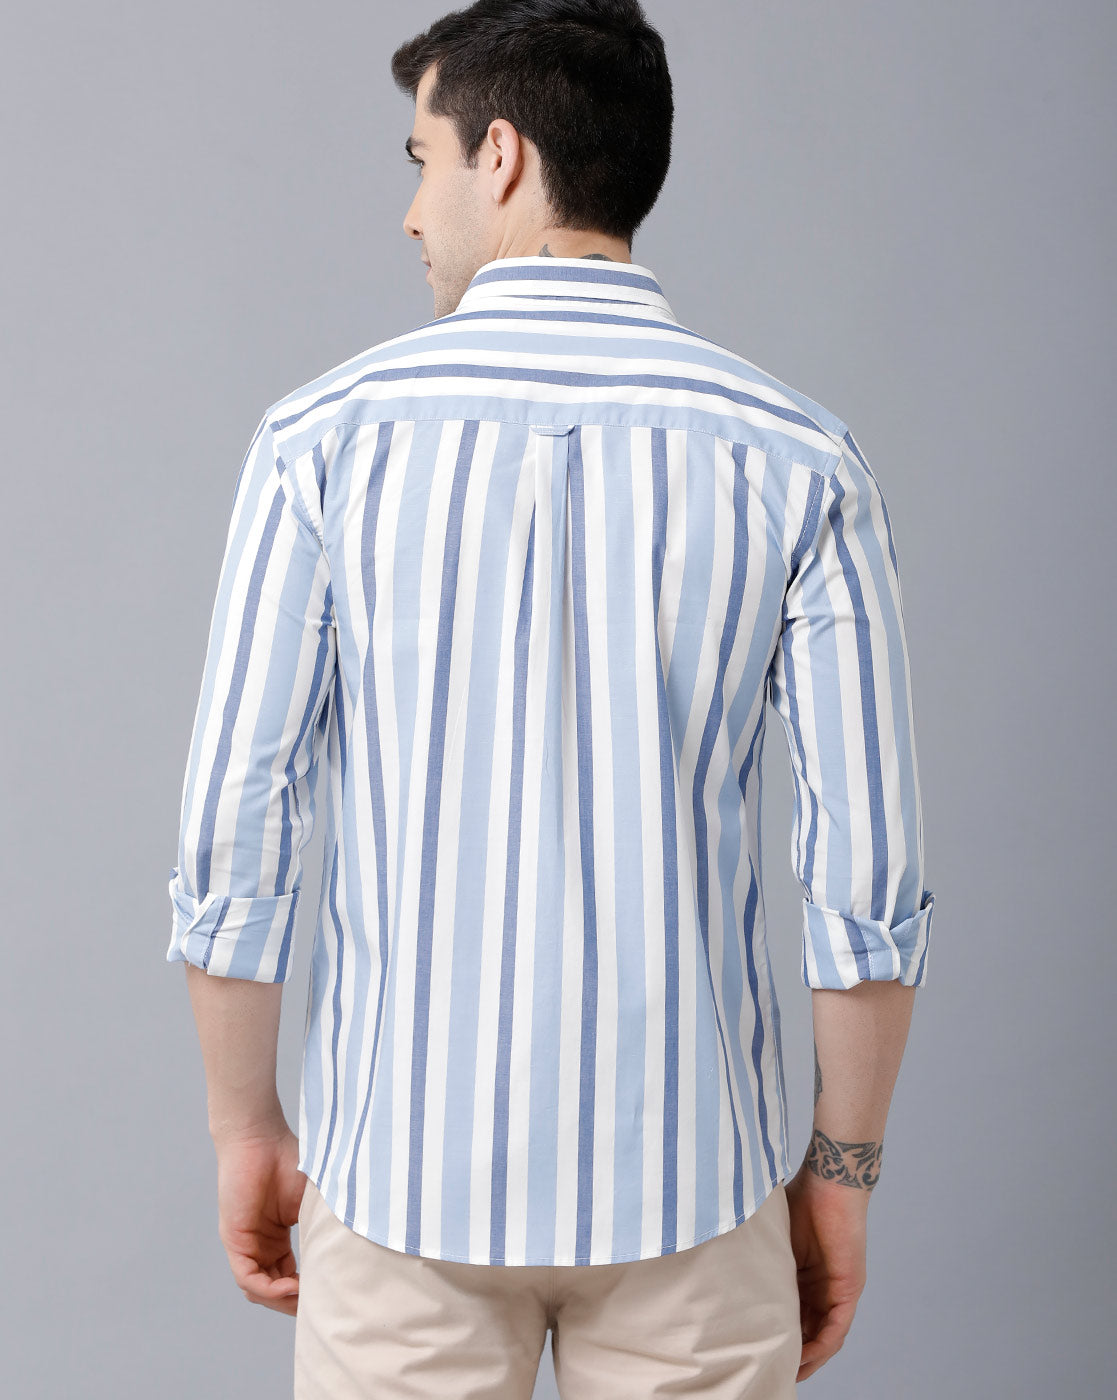 Light blue and white striped shirt